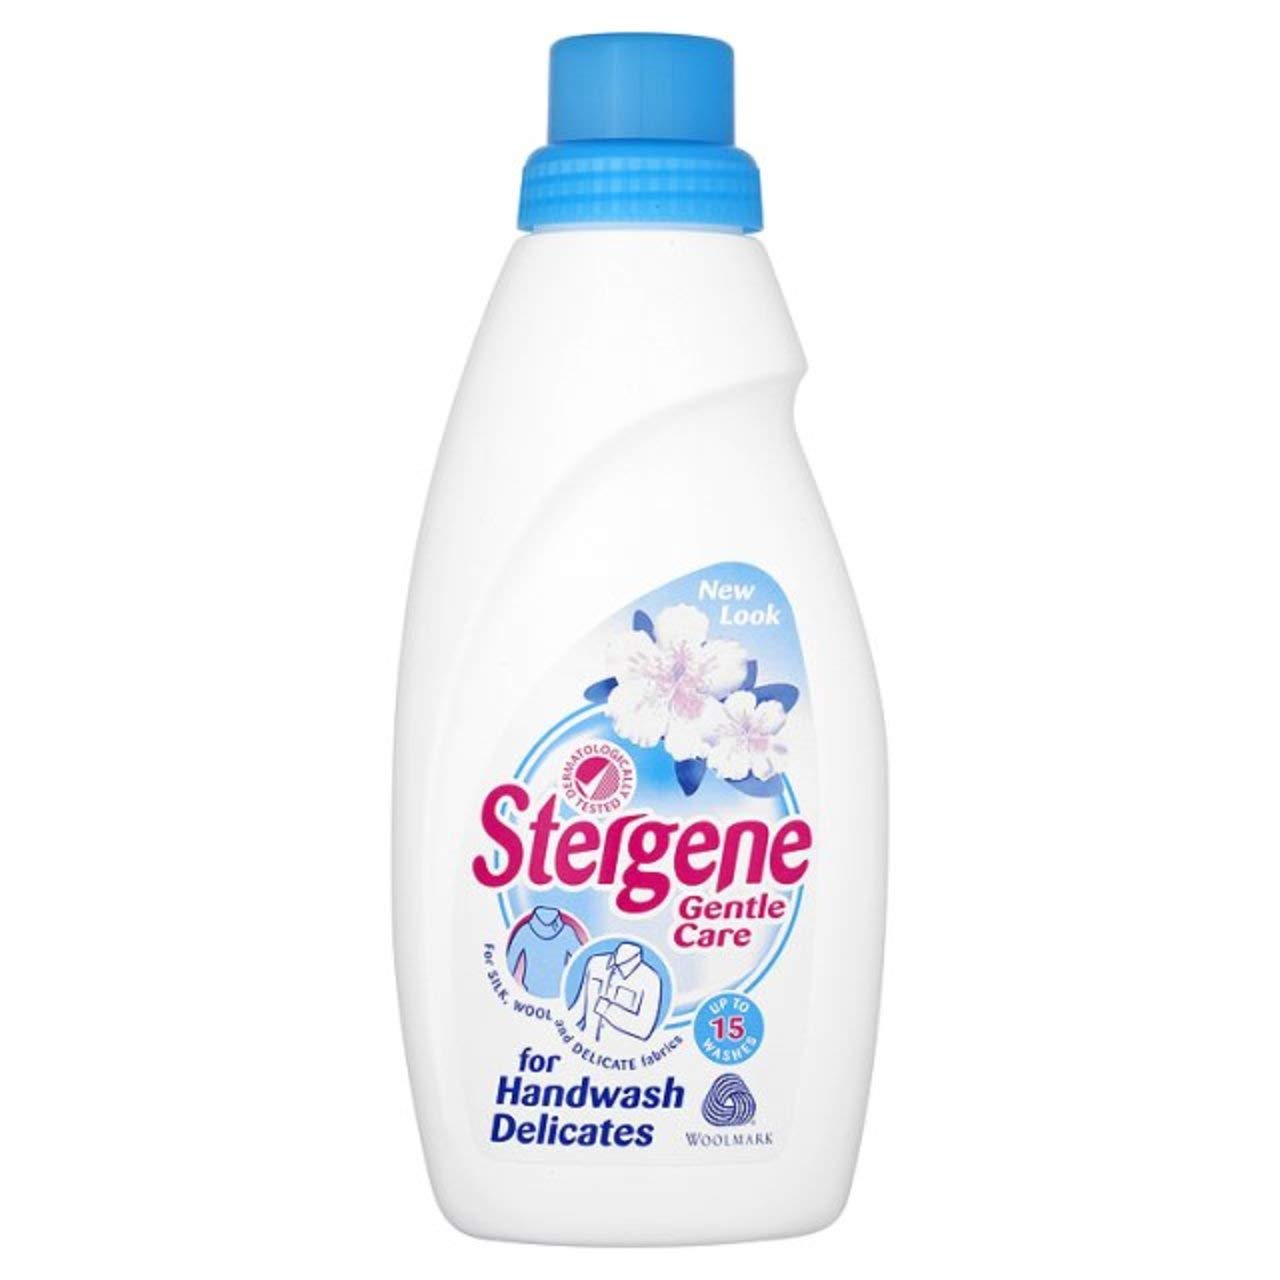 Stergene Handwash Delicates Gentle Care Detergent - 500ml - sassydeals.co.uk